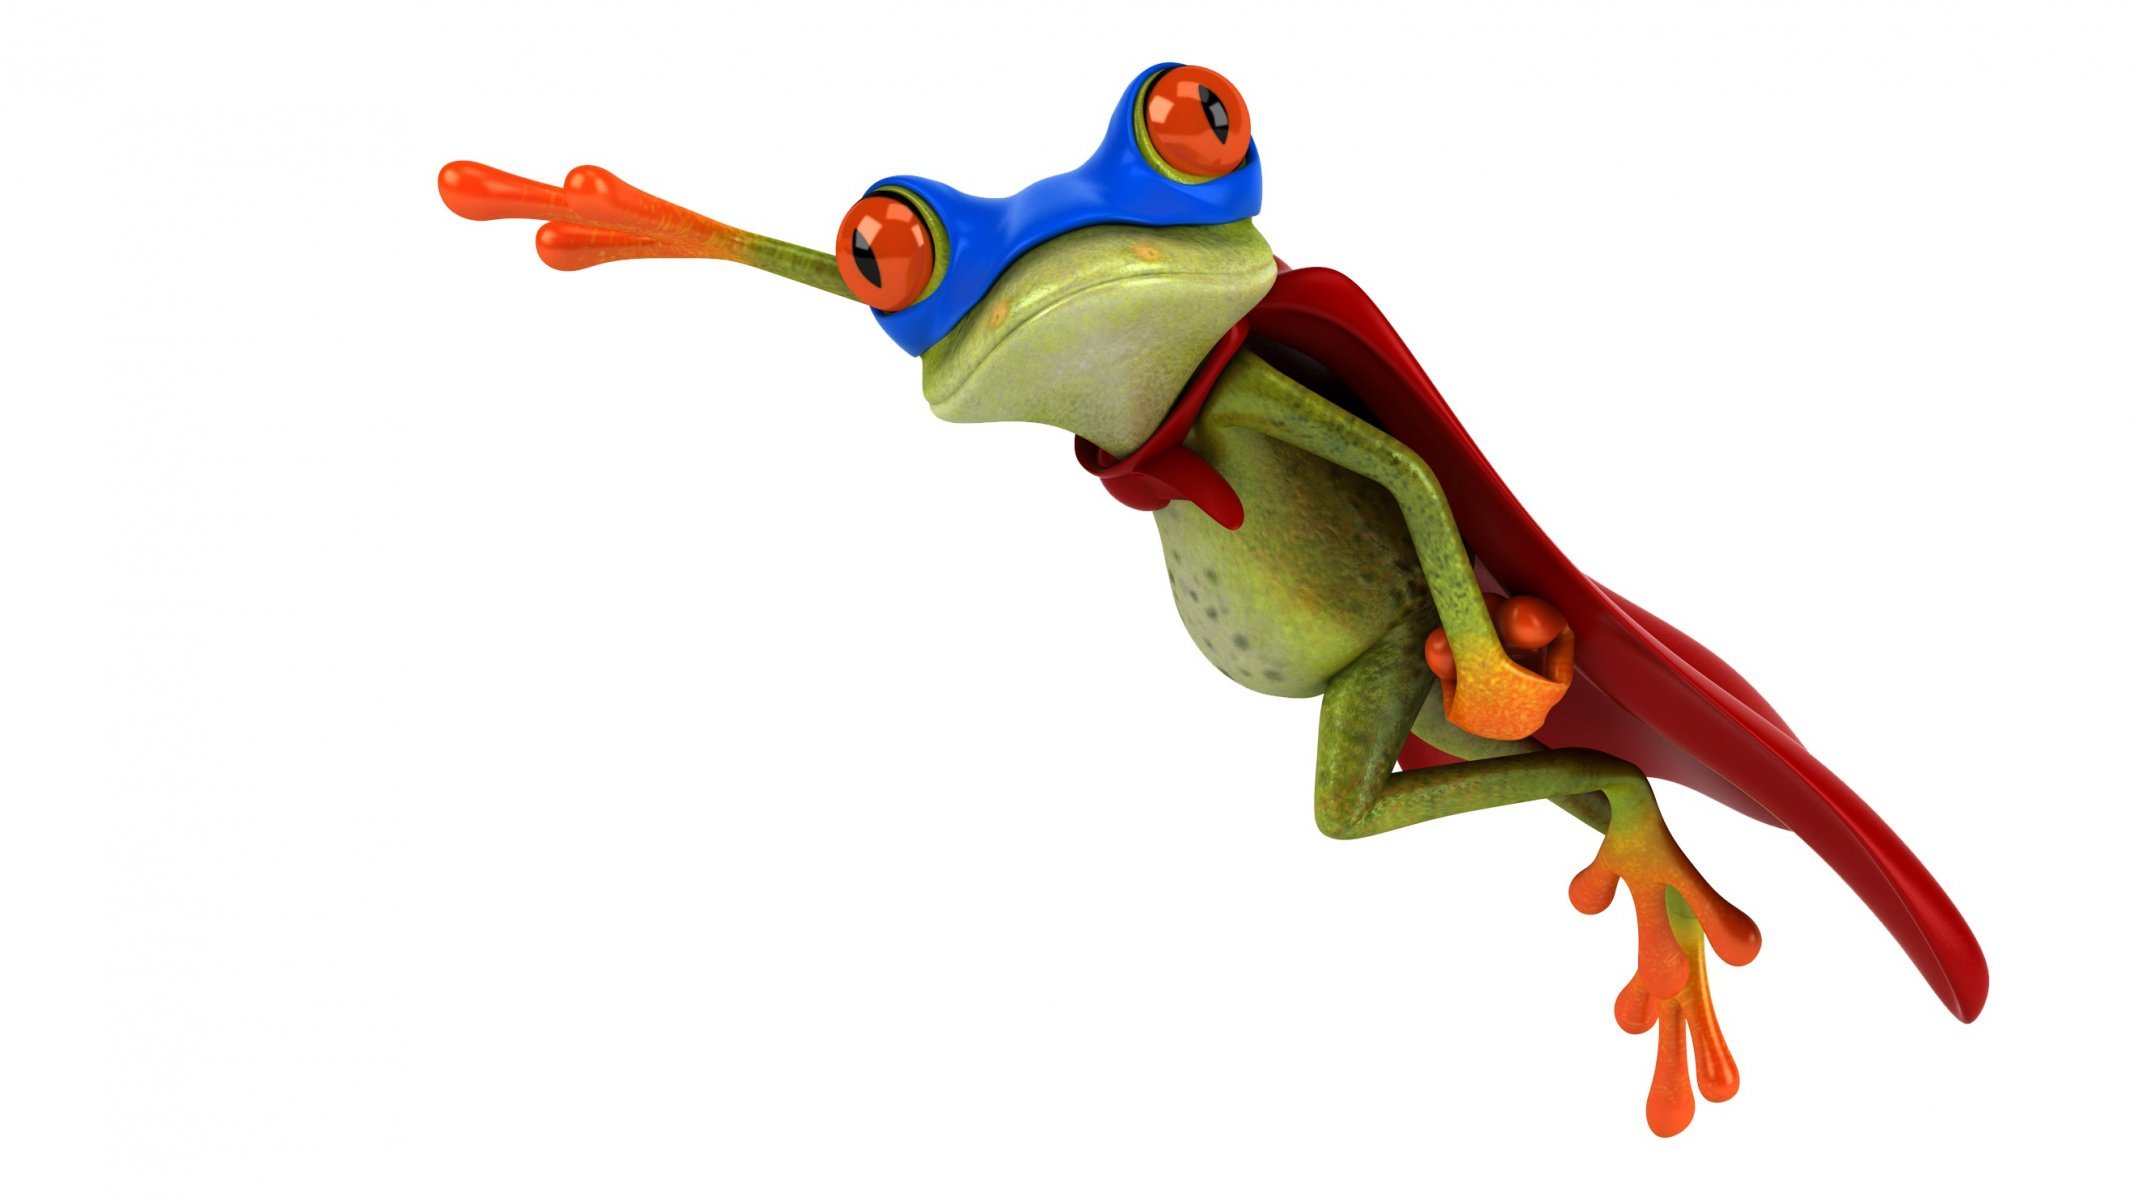 Colorful Digital Art Animals Frog White Background Superman Humor 3D Mask Render Flying Amphibian Re 2133x1200